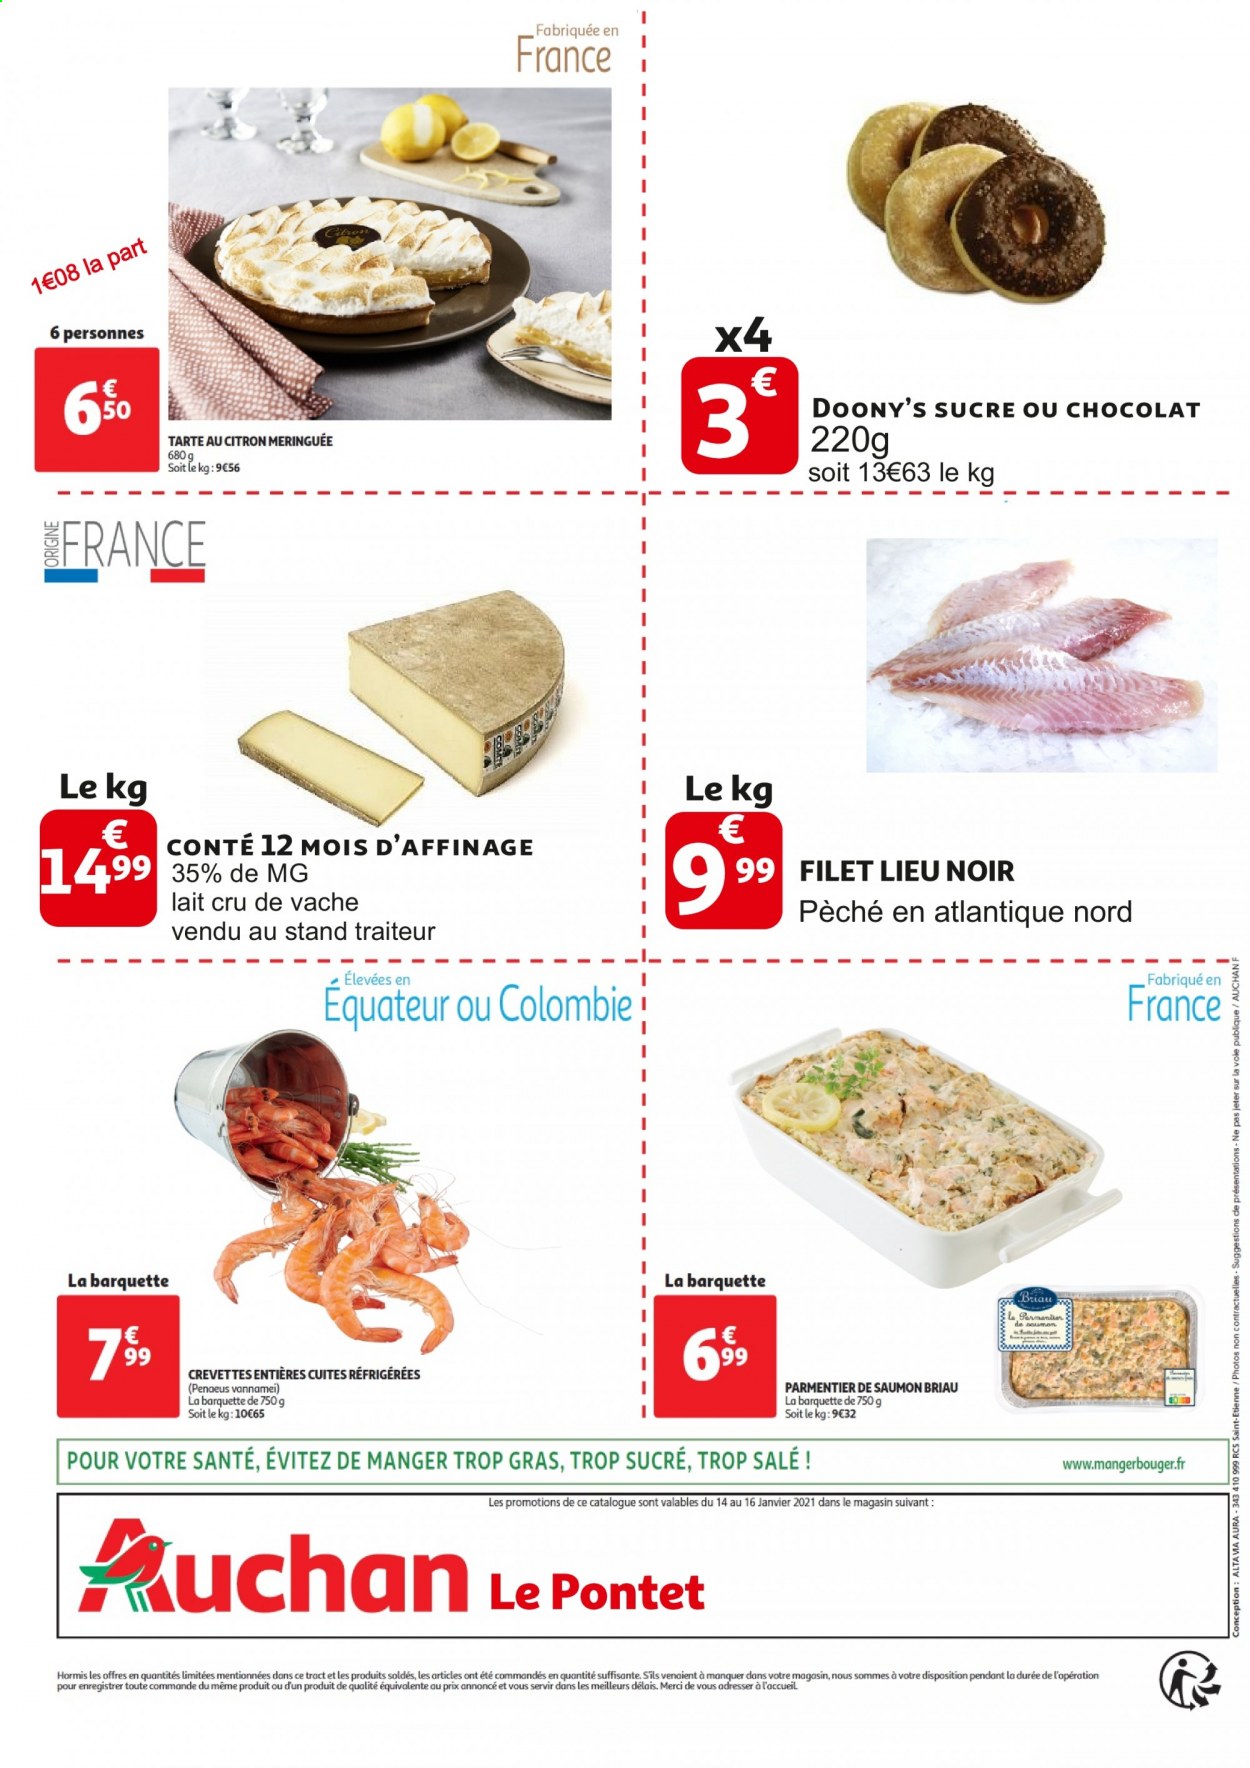 Catalogue Auchan - 14.01.2021 - 16.01.2021. 